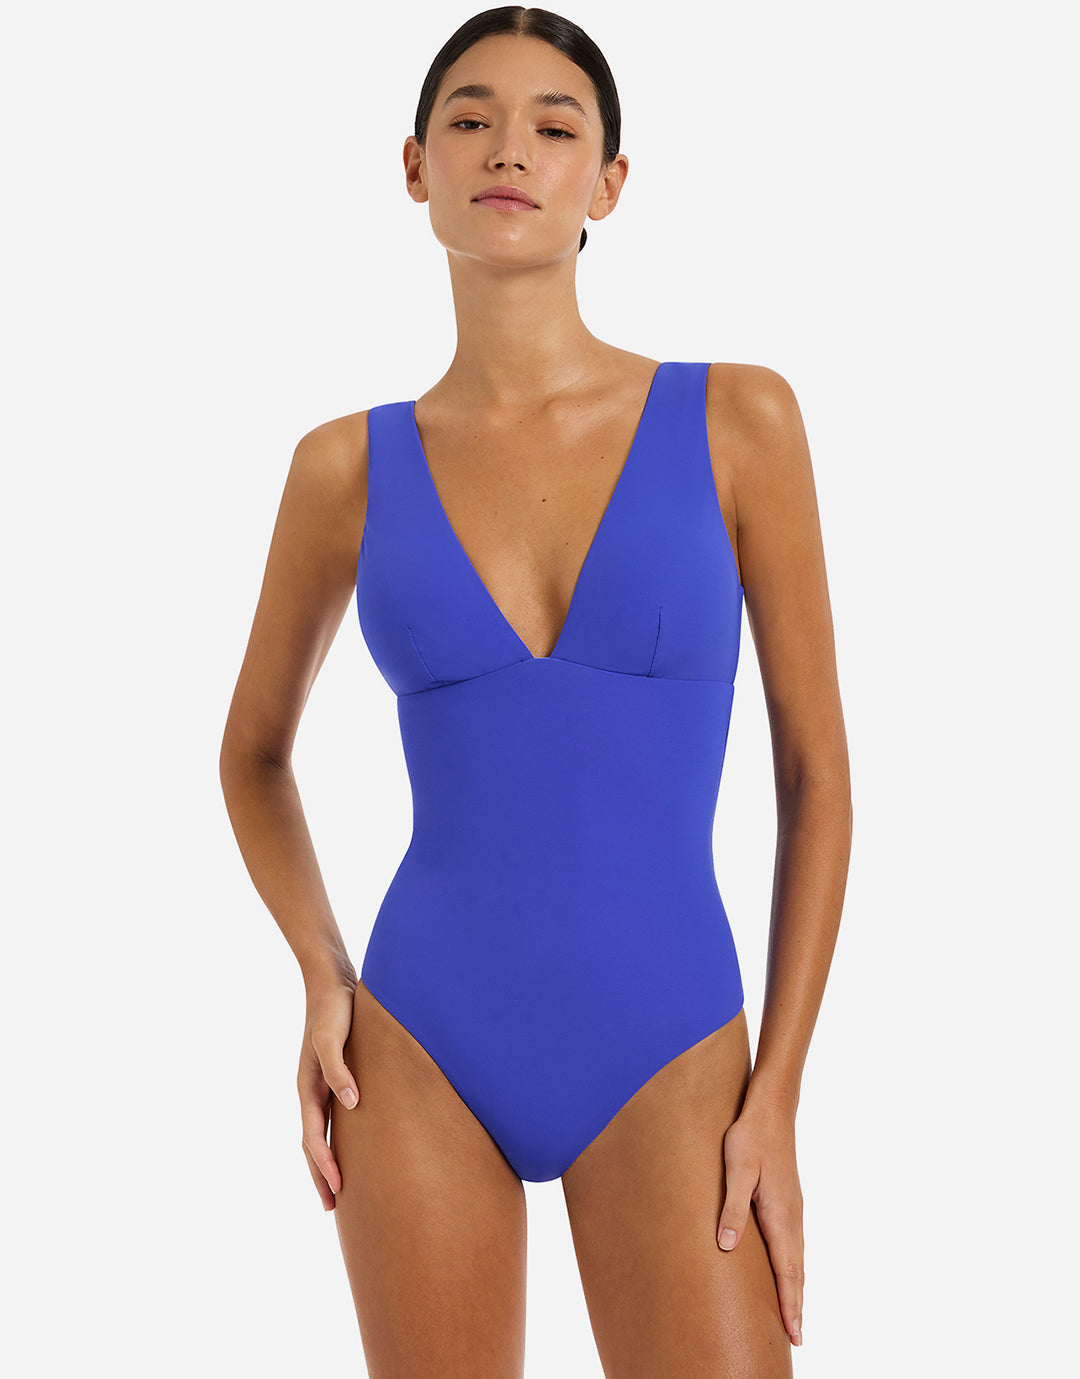 Jetset Plunge Swimsuit - Sapphire - Simply Beach UK